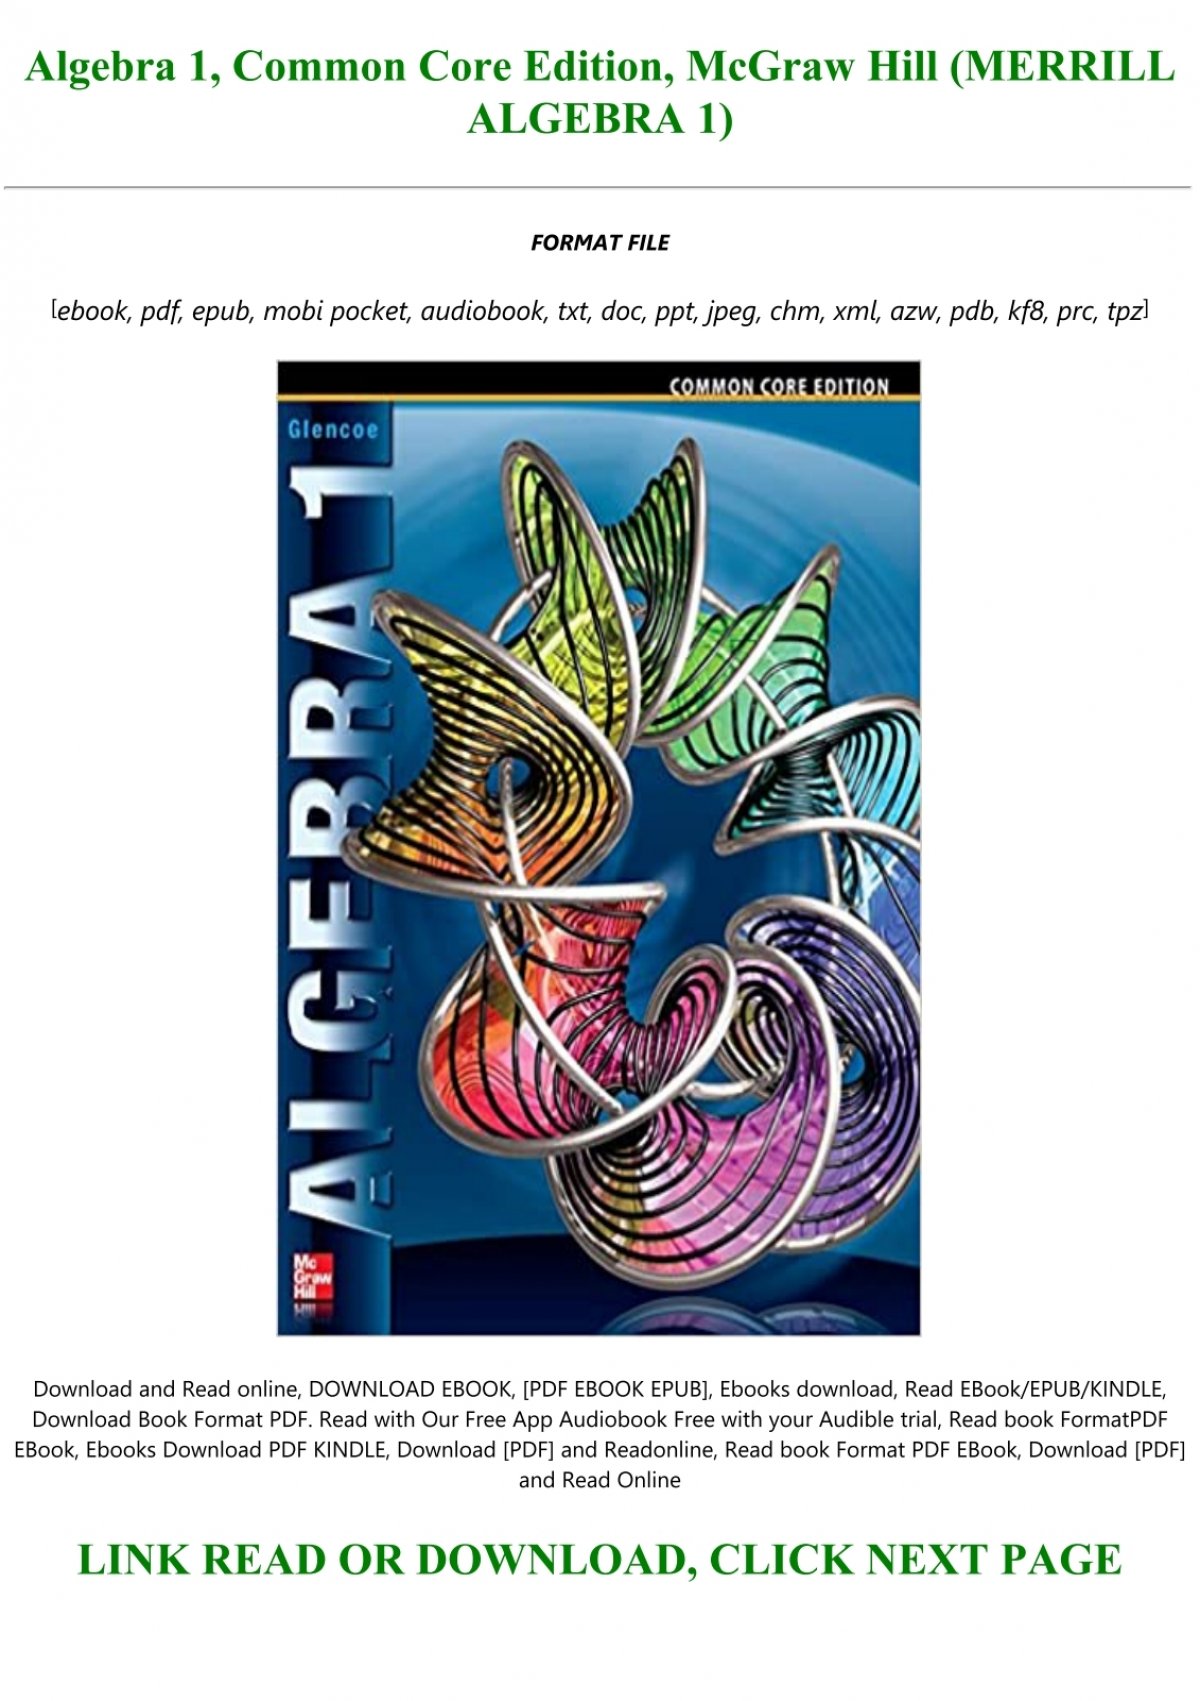 mcgraw hill algebra 1 workbook pdf